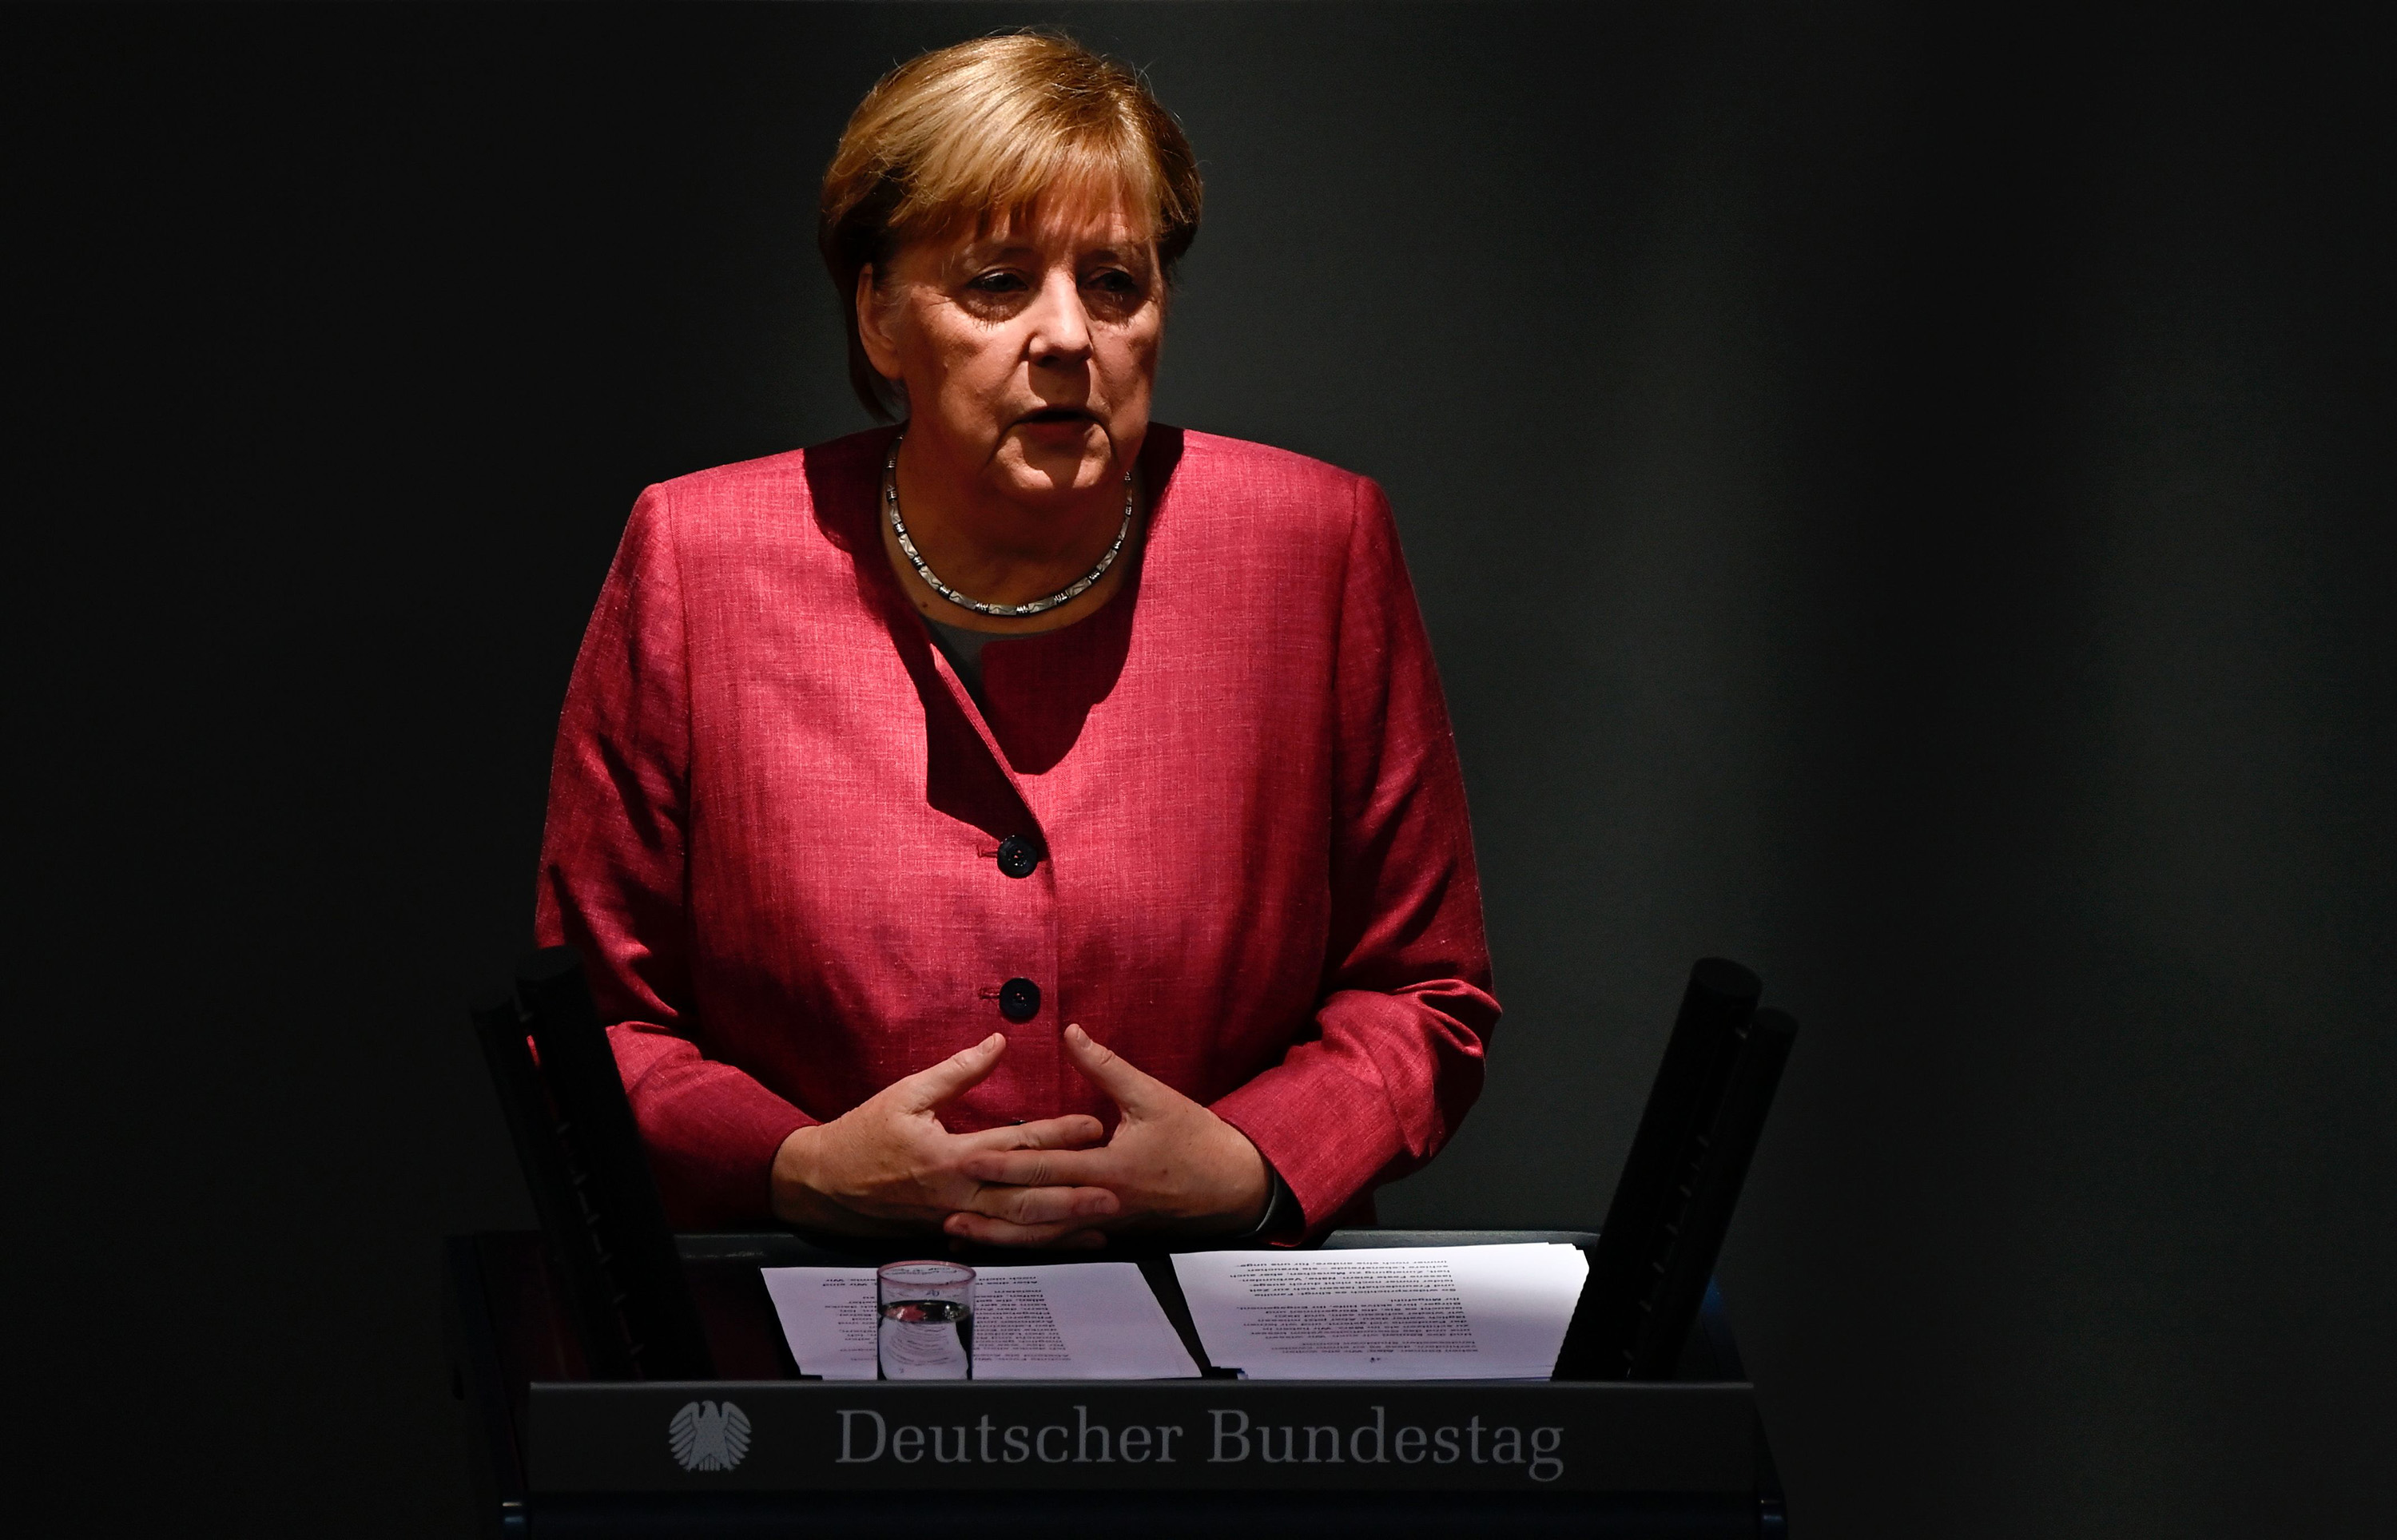 Angela Merkel speaks during a session at the Bundestag in Berlin on Sept. 30.